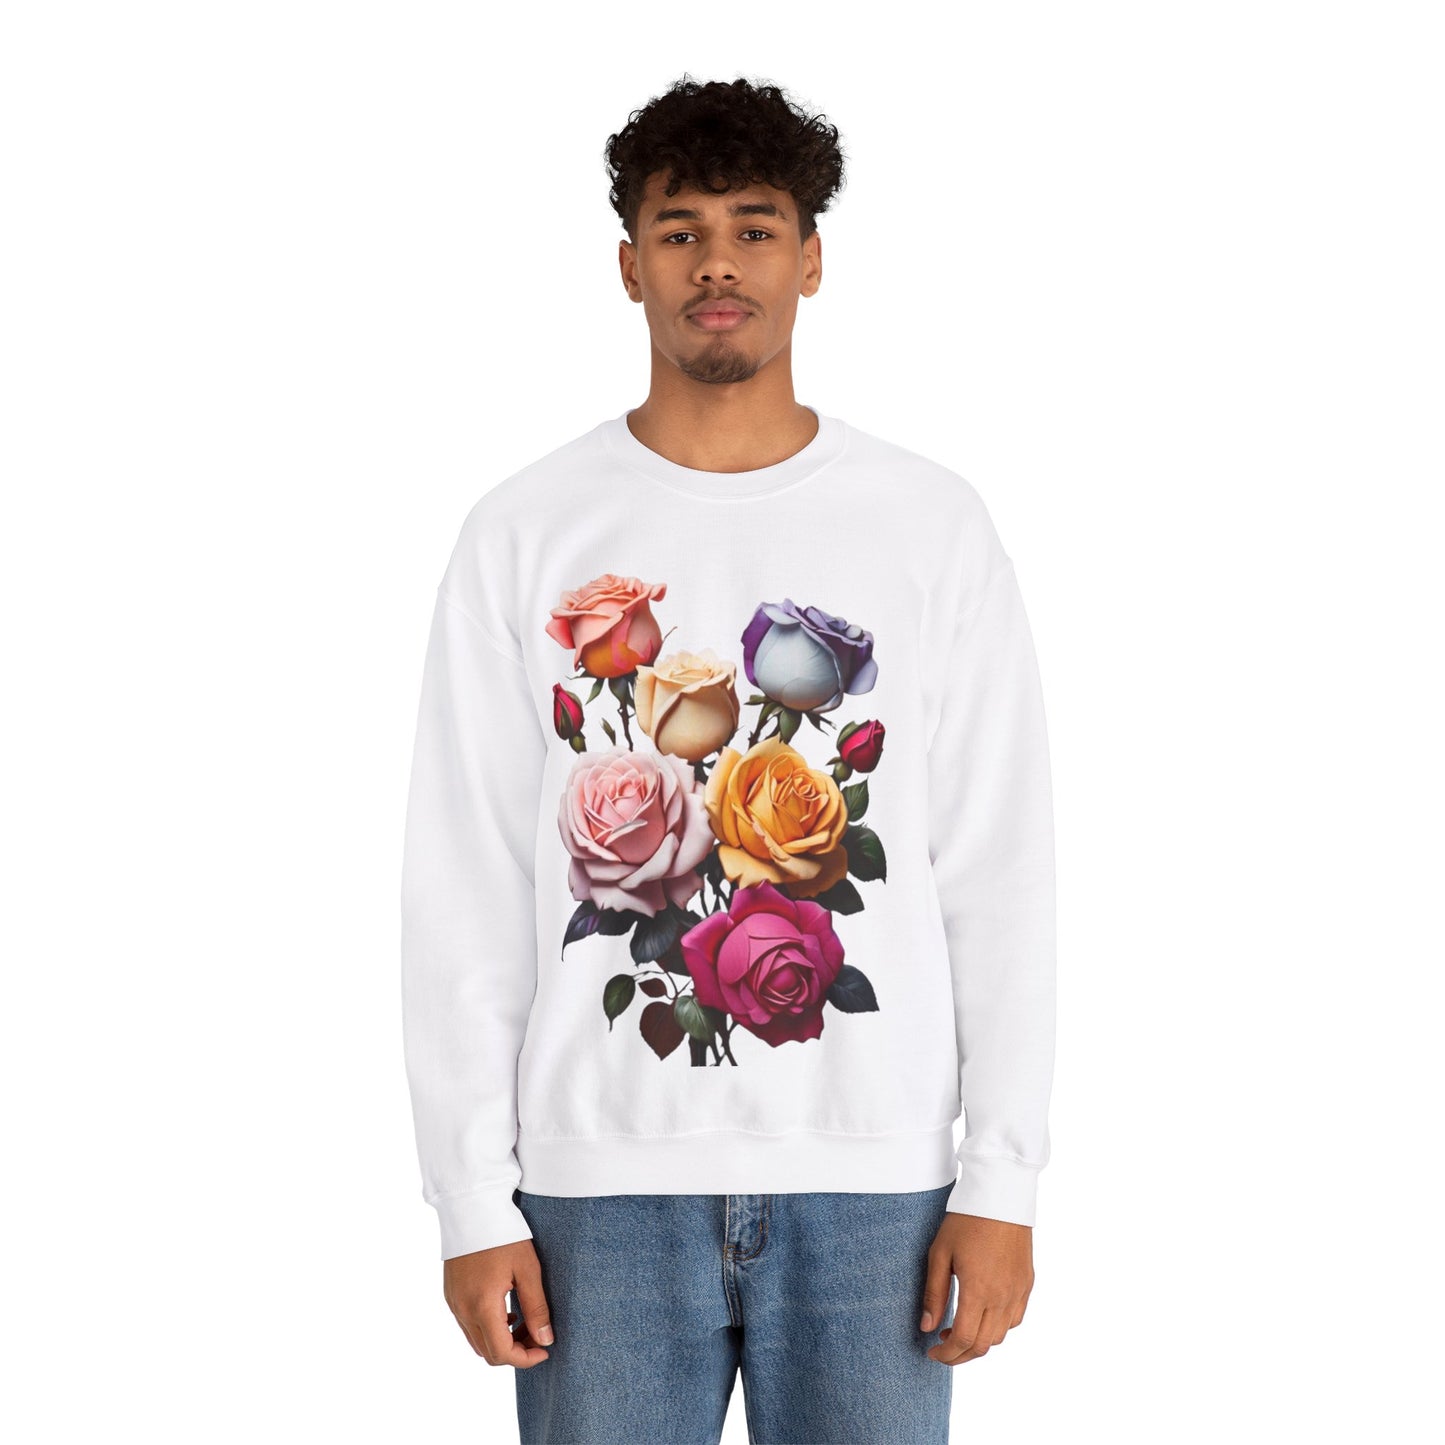 Multicoloured Roses - Unisex Crewneck Sweatshirt